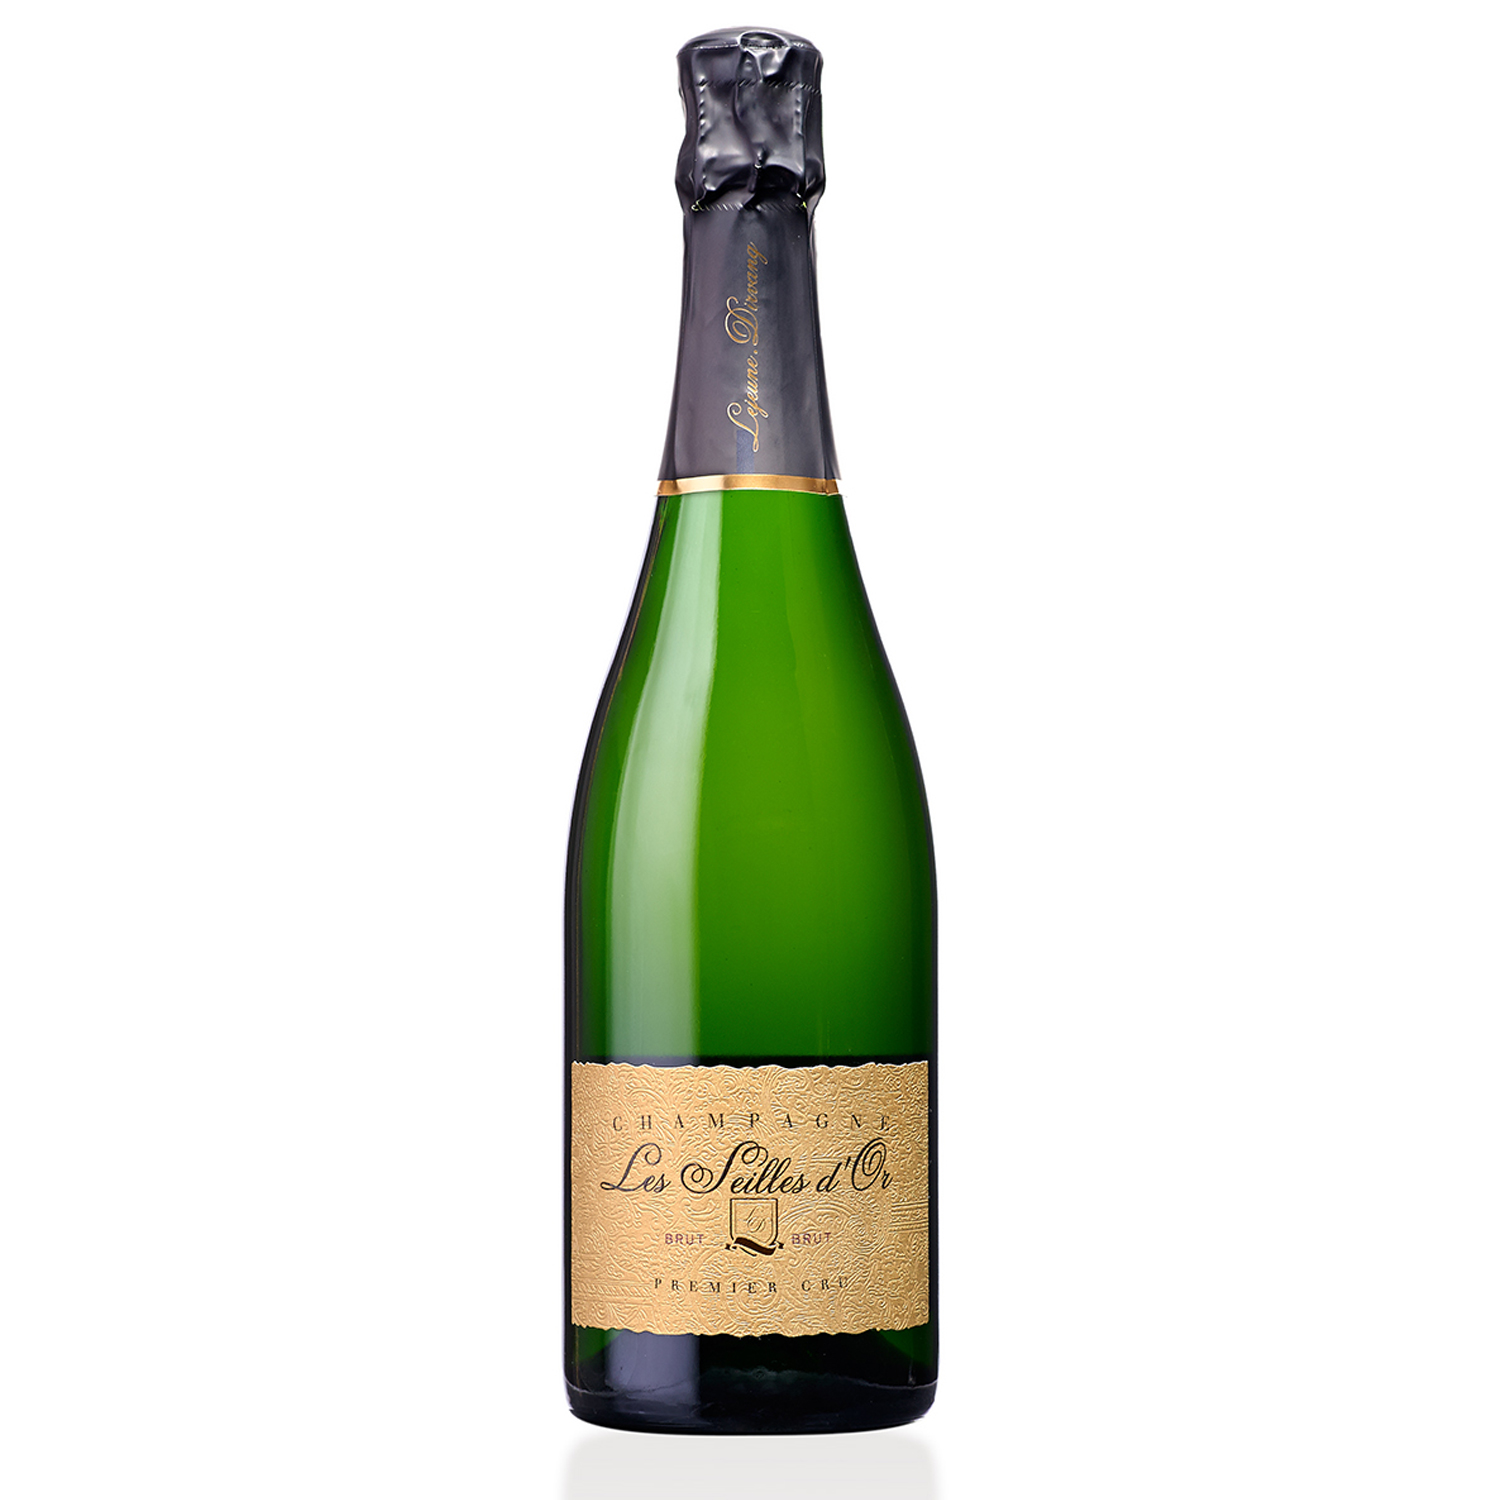 Champagne Lejeune-Dirvang: Les Seilles d'Or - 1er Cru